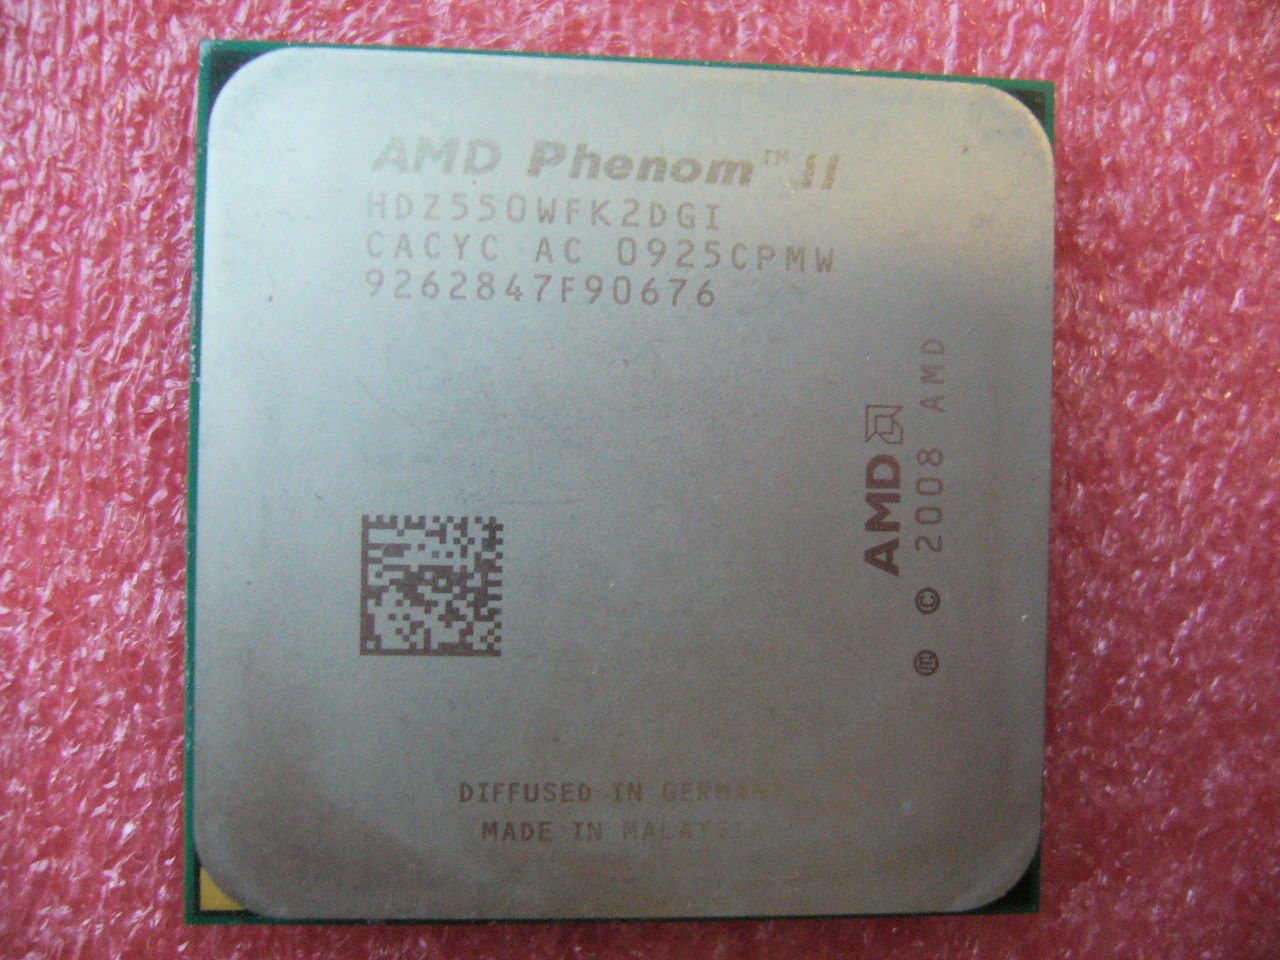 QTY 1x AMD Phenom II X2 550 3.1GHz Dual-Core (HDZ550WFK2DGI) CPU Socket AM3 - Click Image to Close